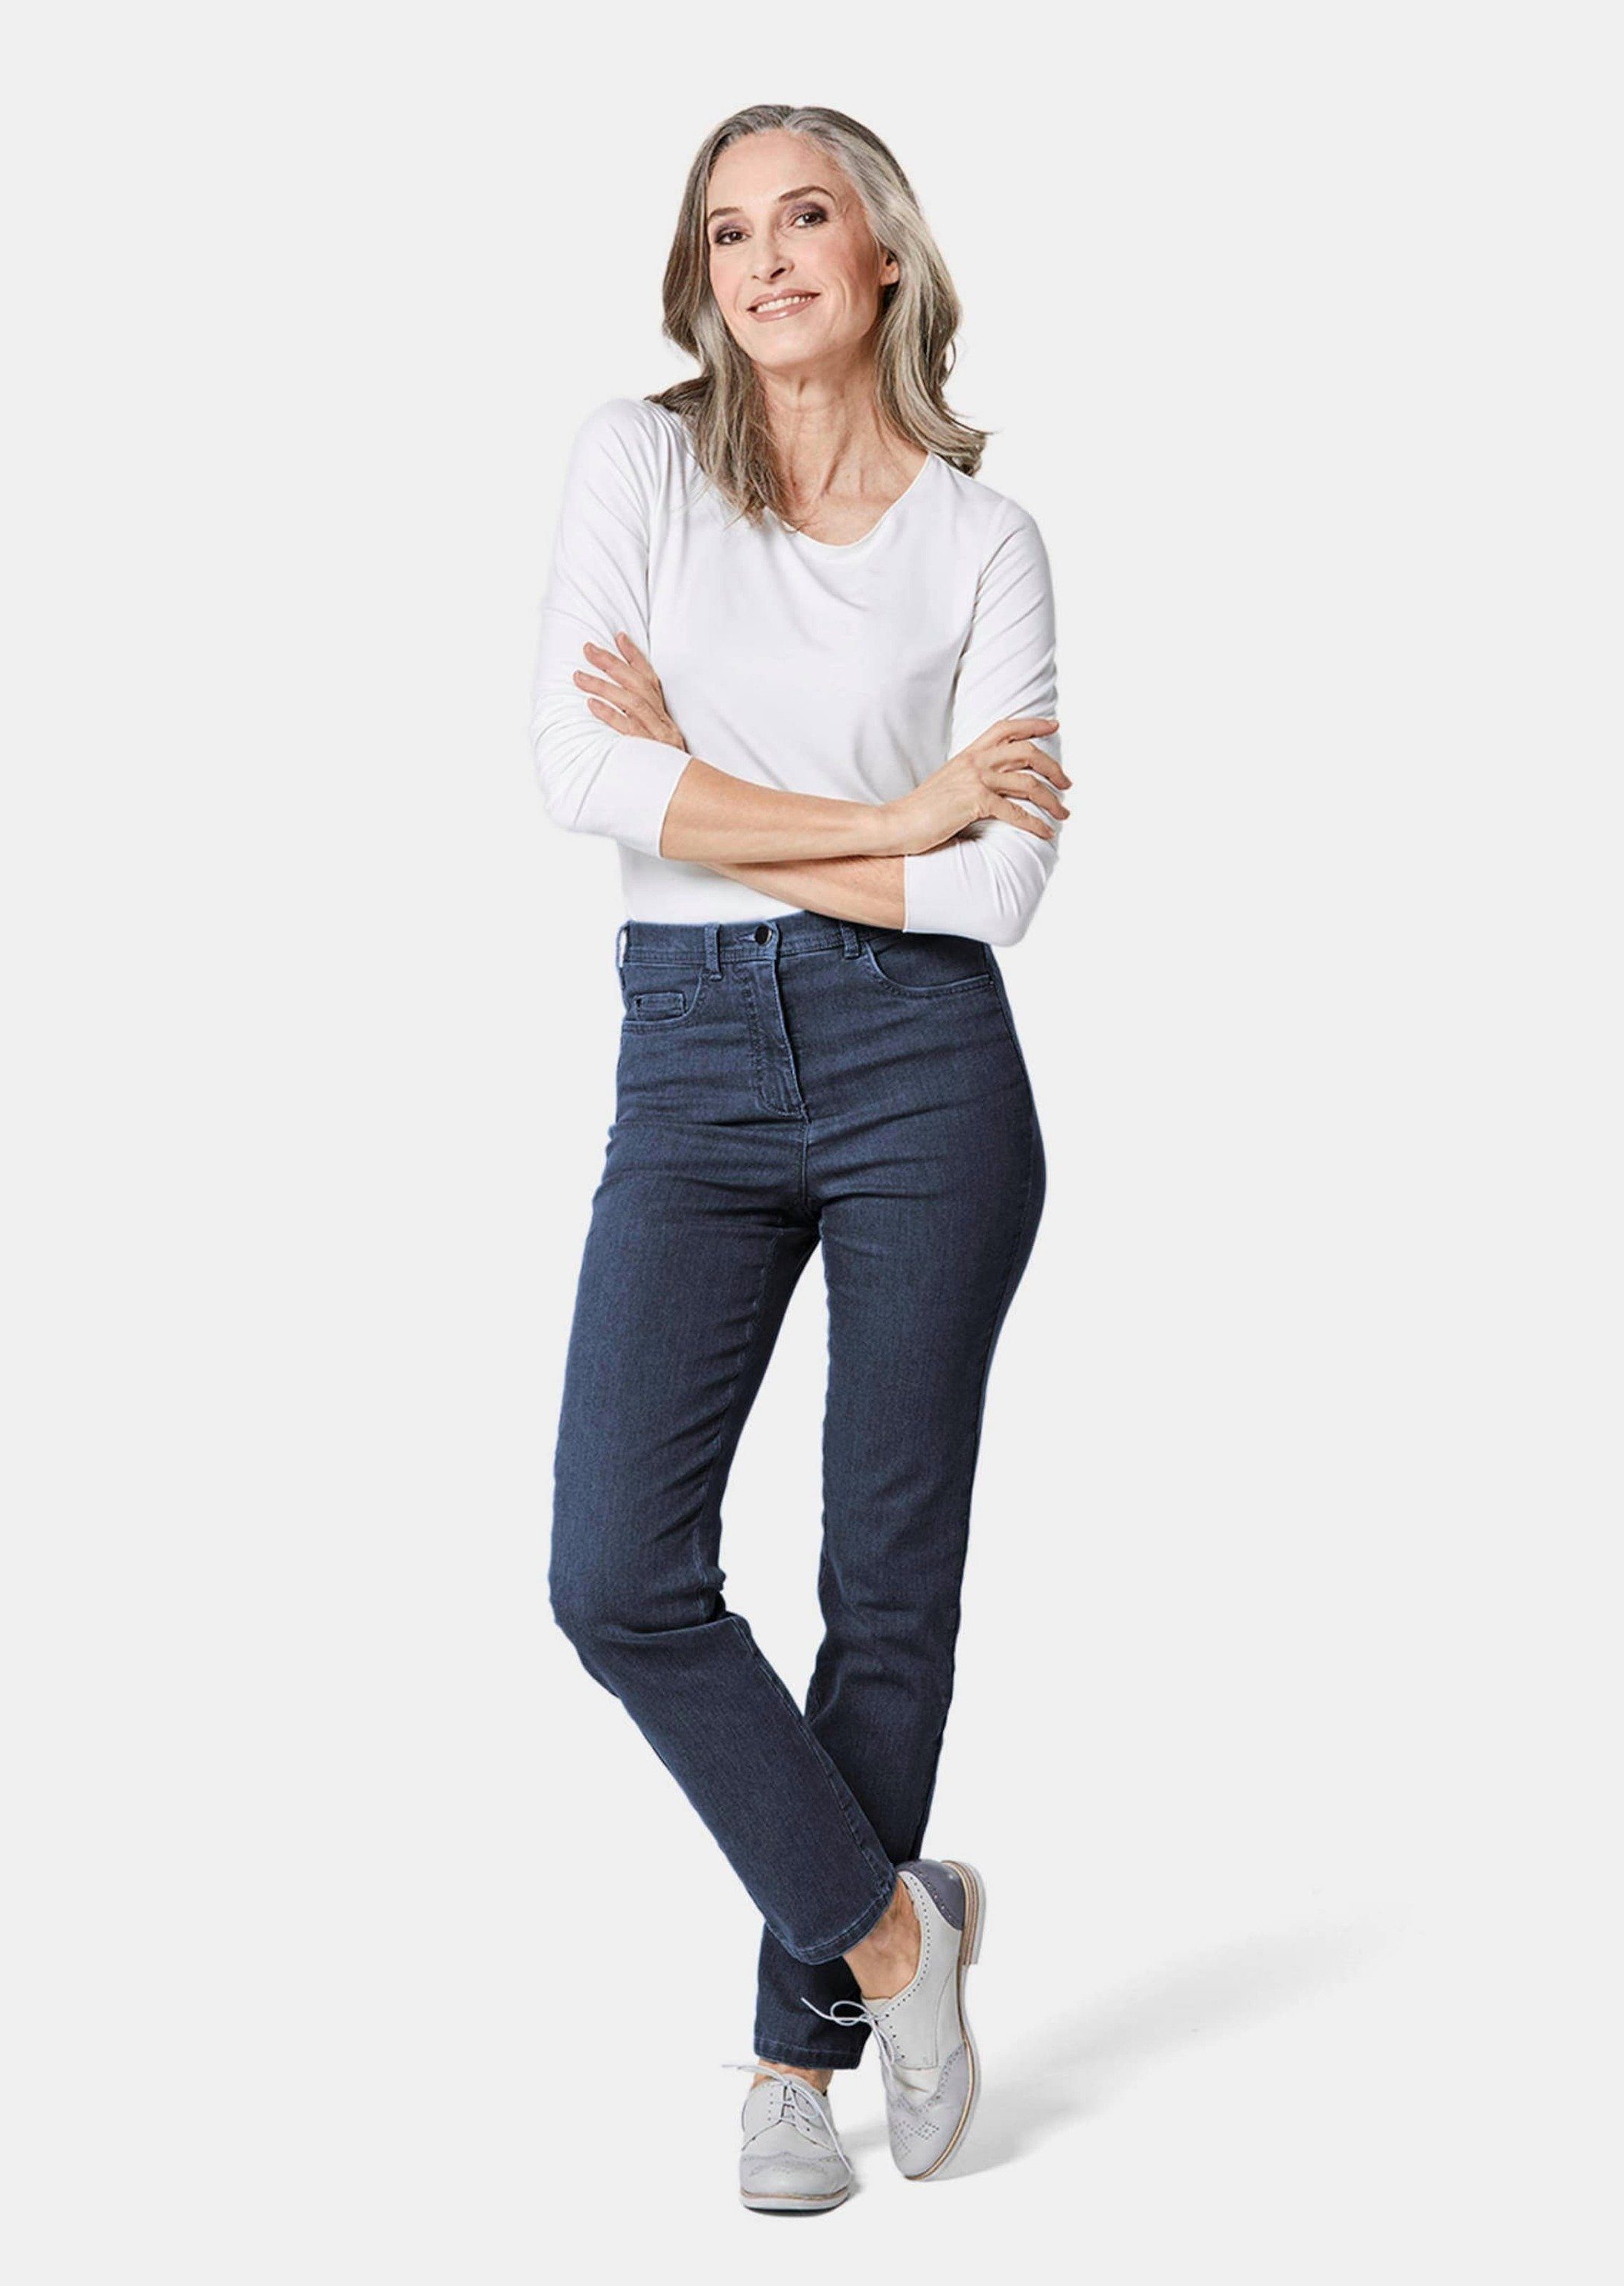 GOLDNER High-Stretch-Jeanshose Bequeme Bequeme Kurzgröße: dunkelblau Jeans